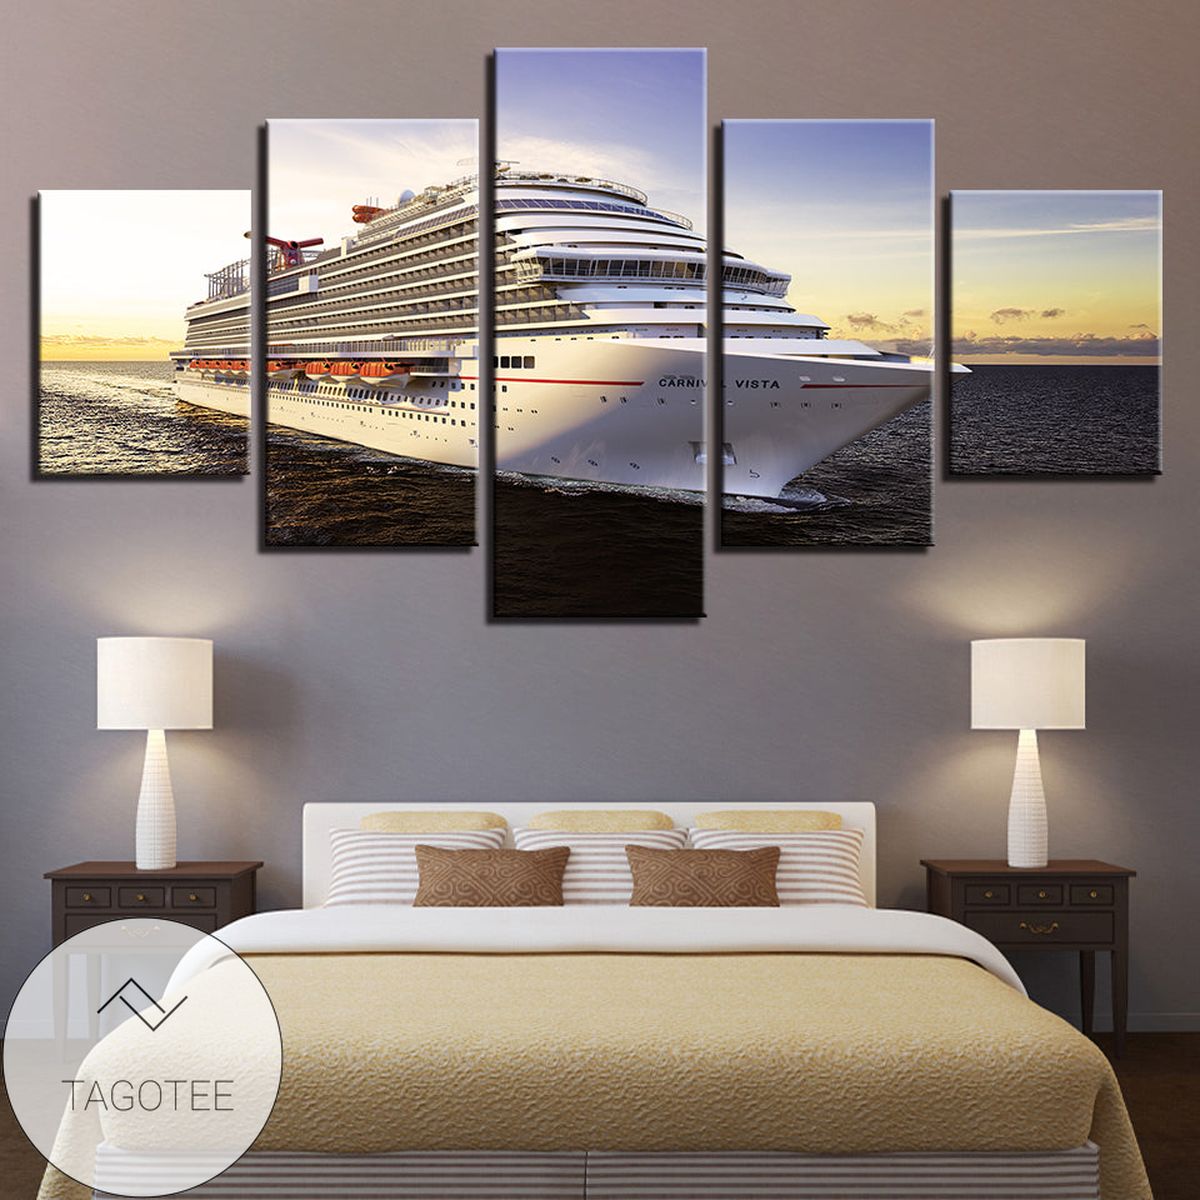 Carnival Vista Cruise Ship Five Panel Canvas 5 Piece Wall Art Set